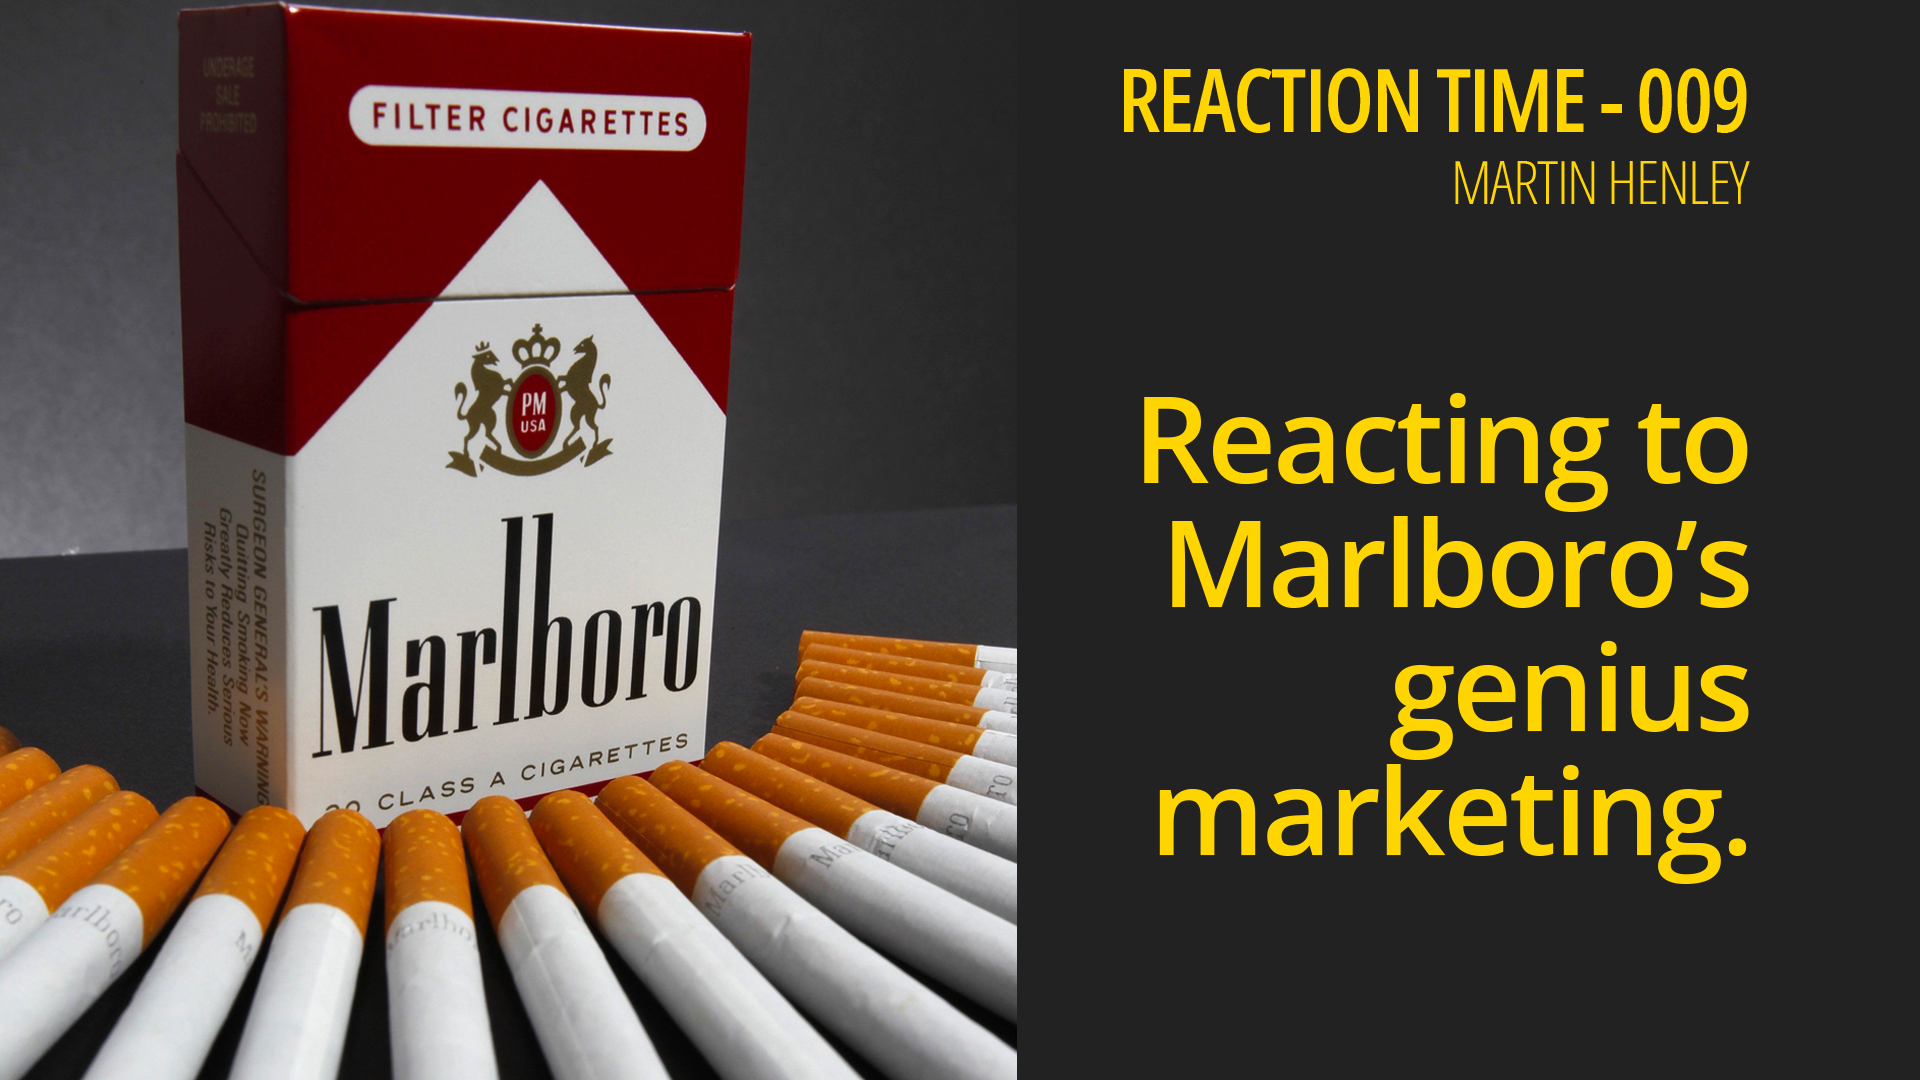 Reacting to Marlboro’s Genius Marketing – Reaction Time 009